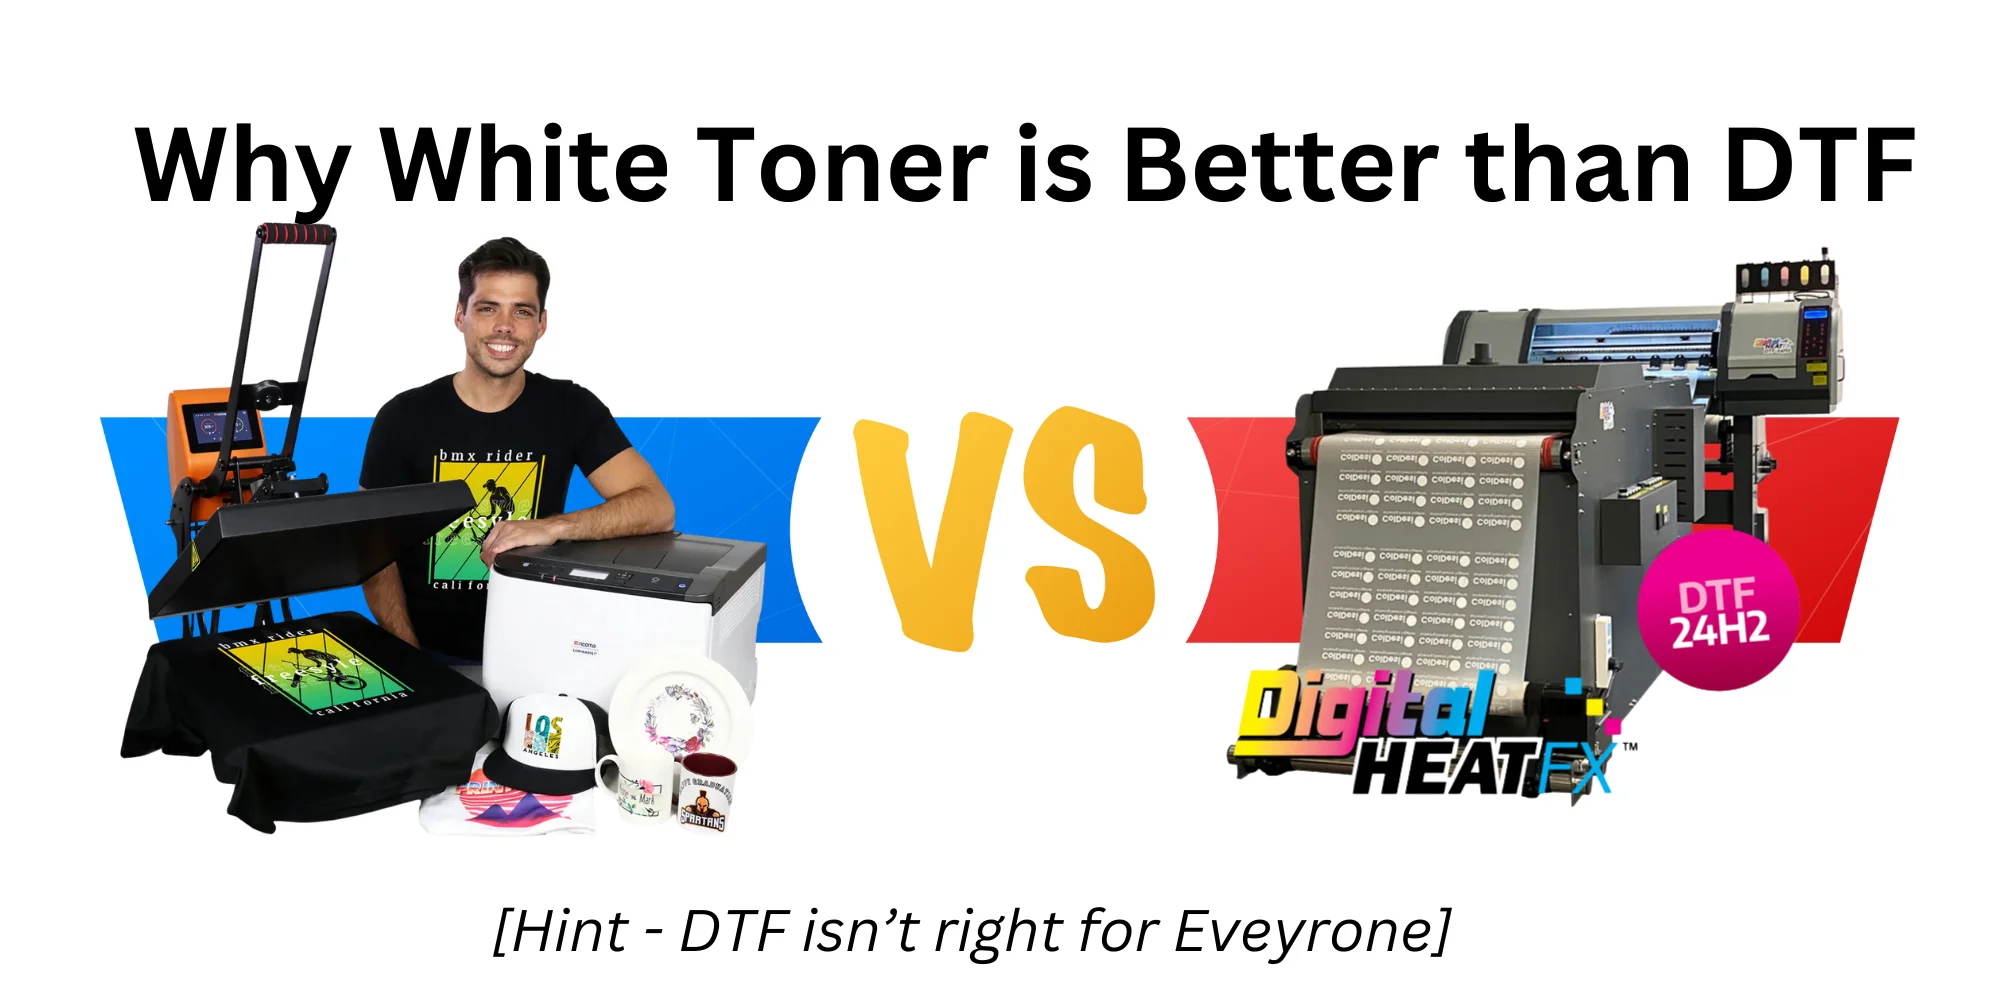 White Toner Printing vs DTF - white toner wins